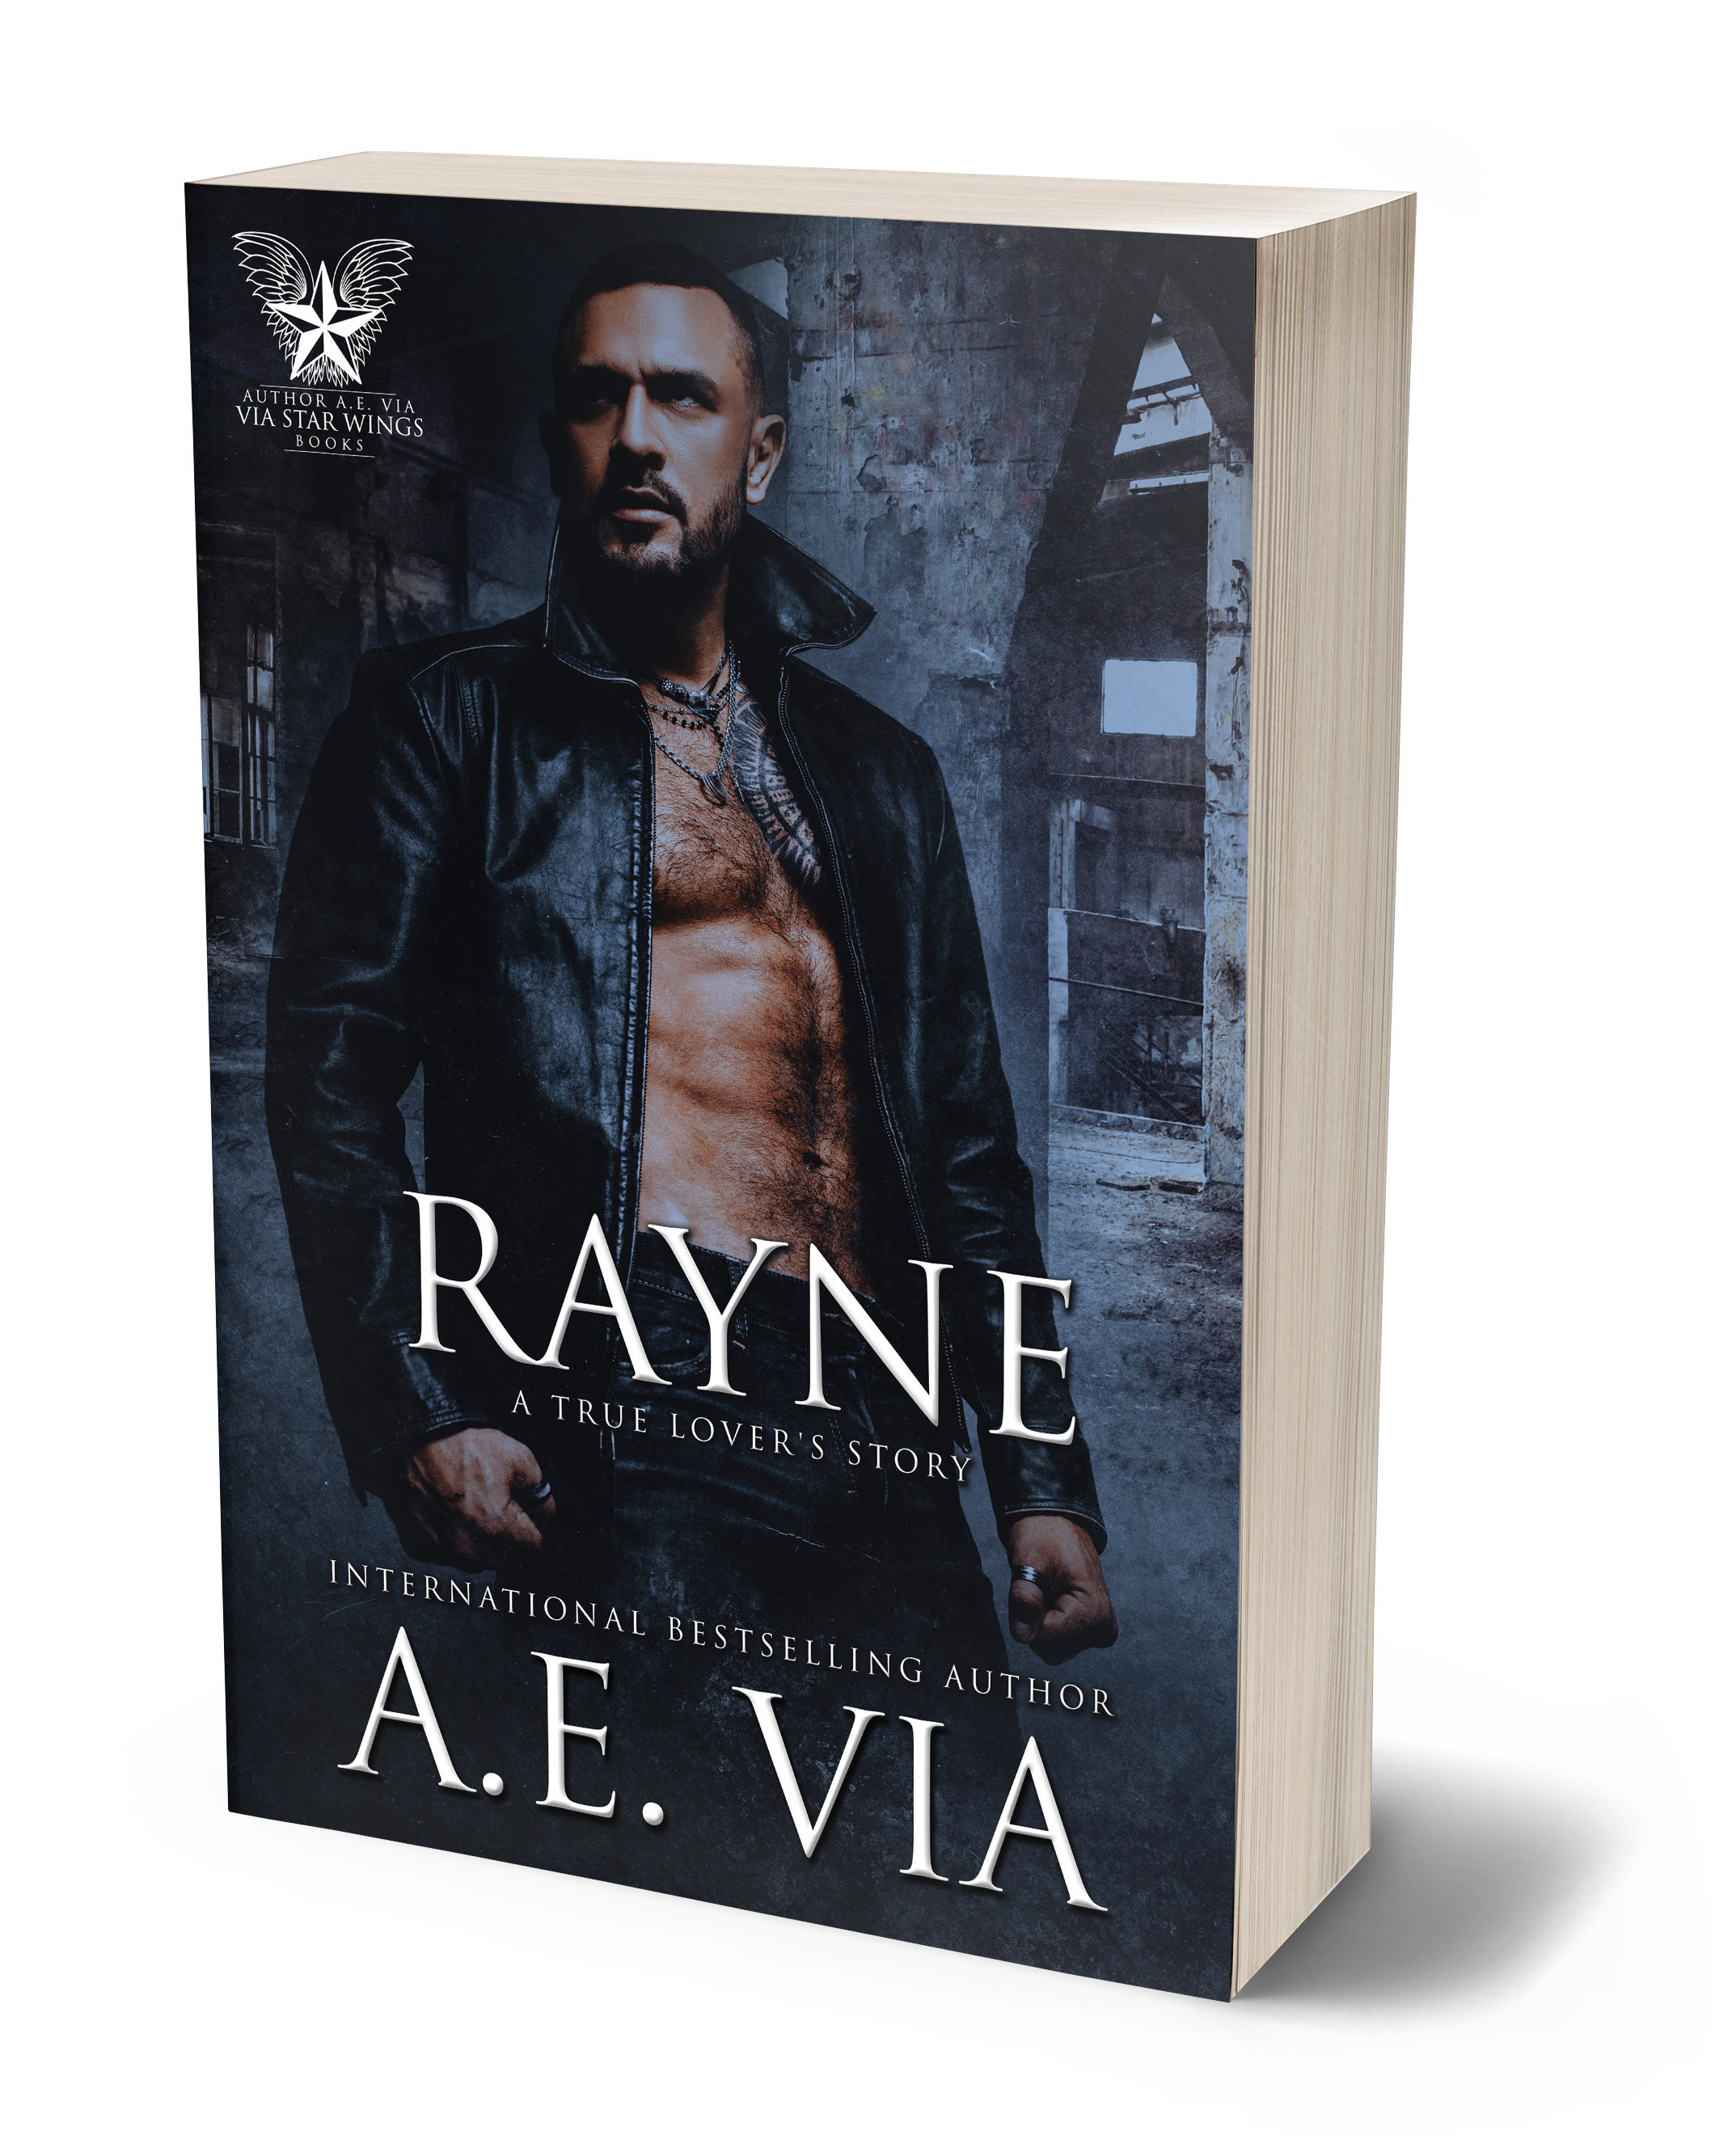 Rayne: A True Lover's Story